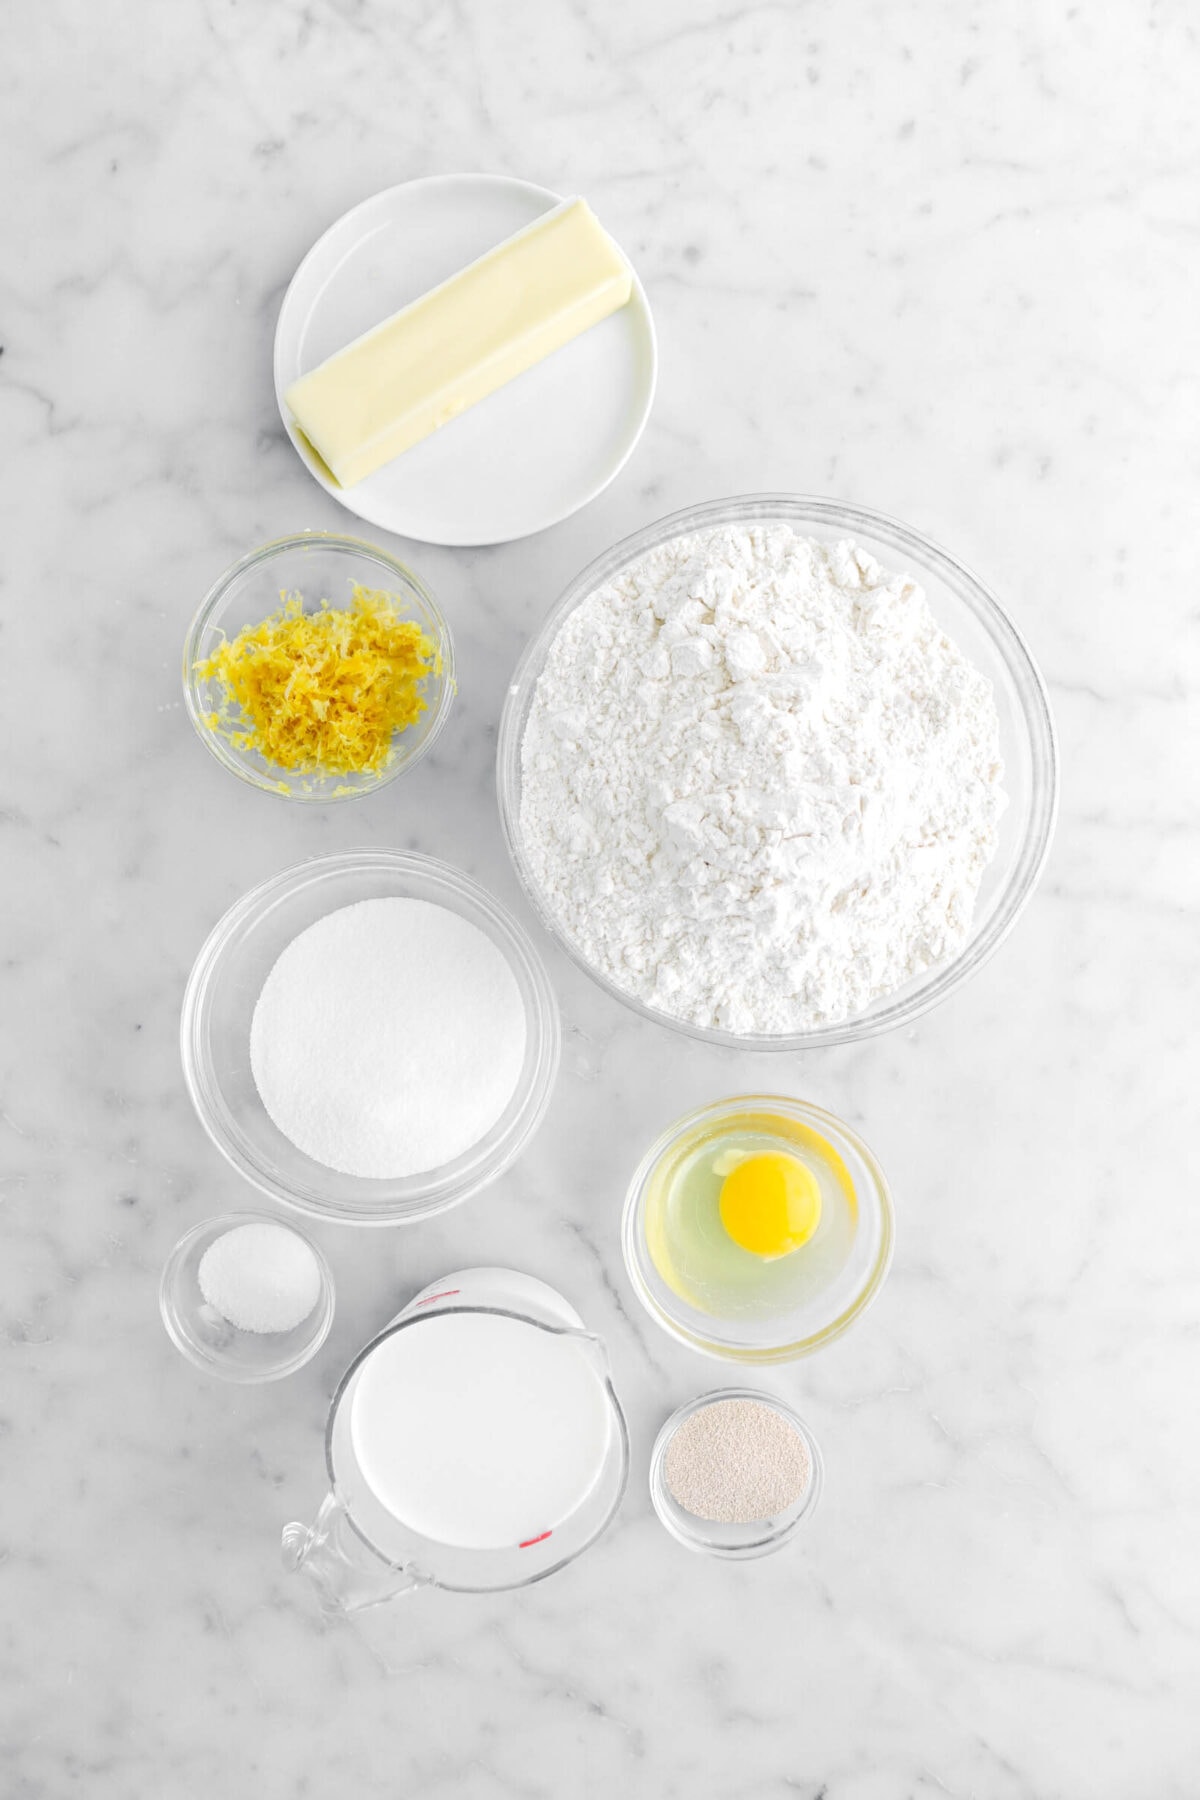 butter, lemon zest, flour, sugar, egg, salt, milk, and yeast on marble surface.